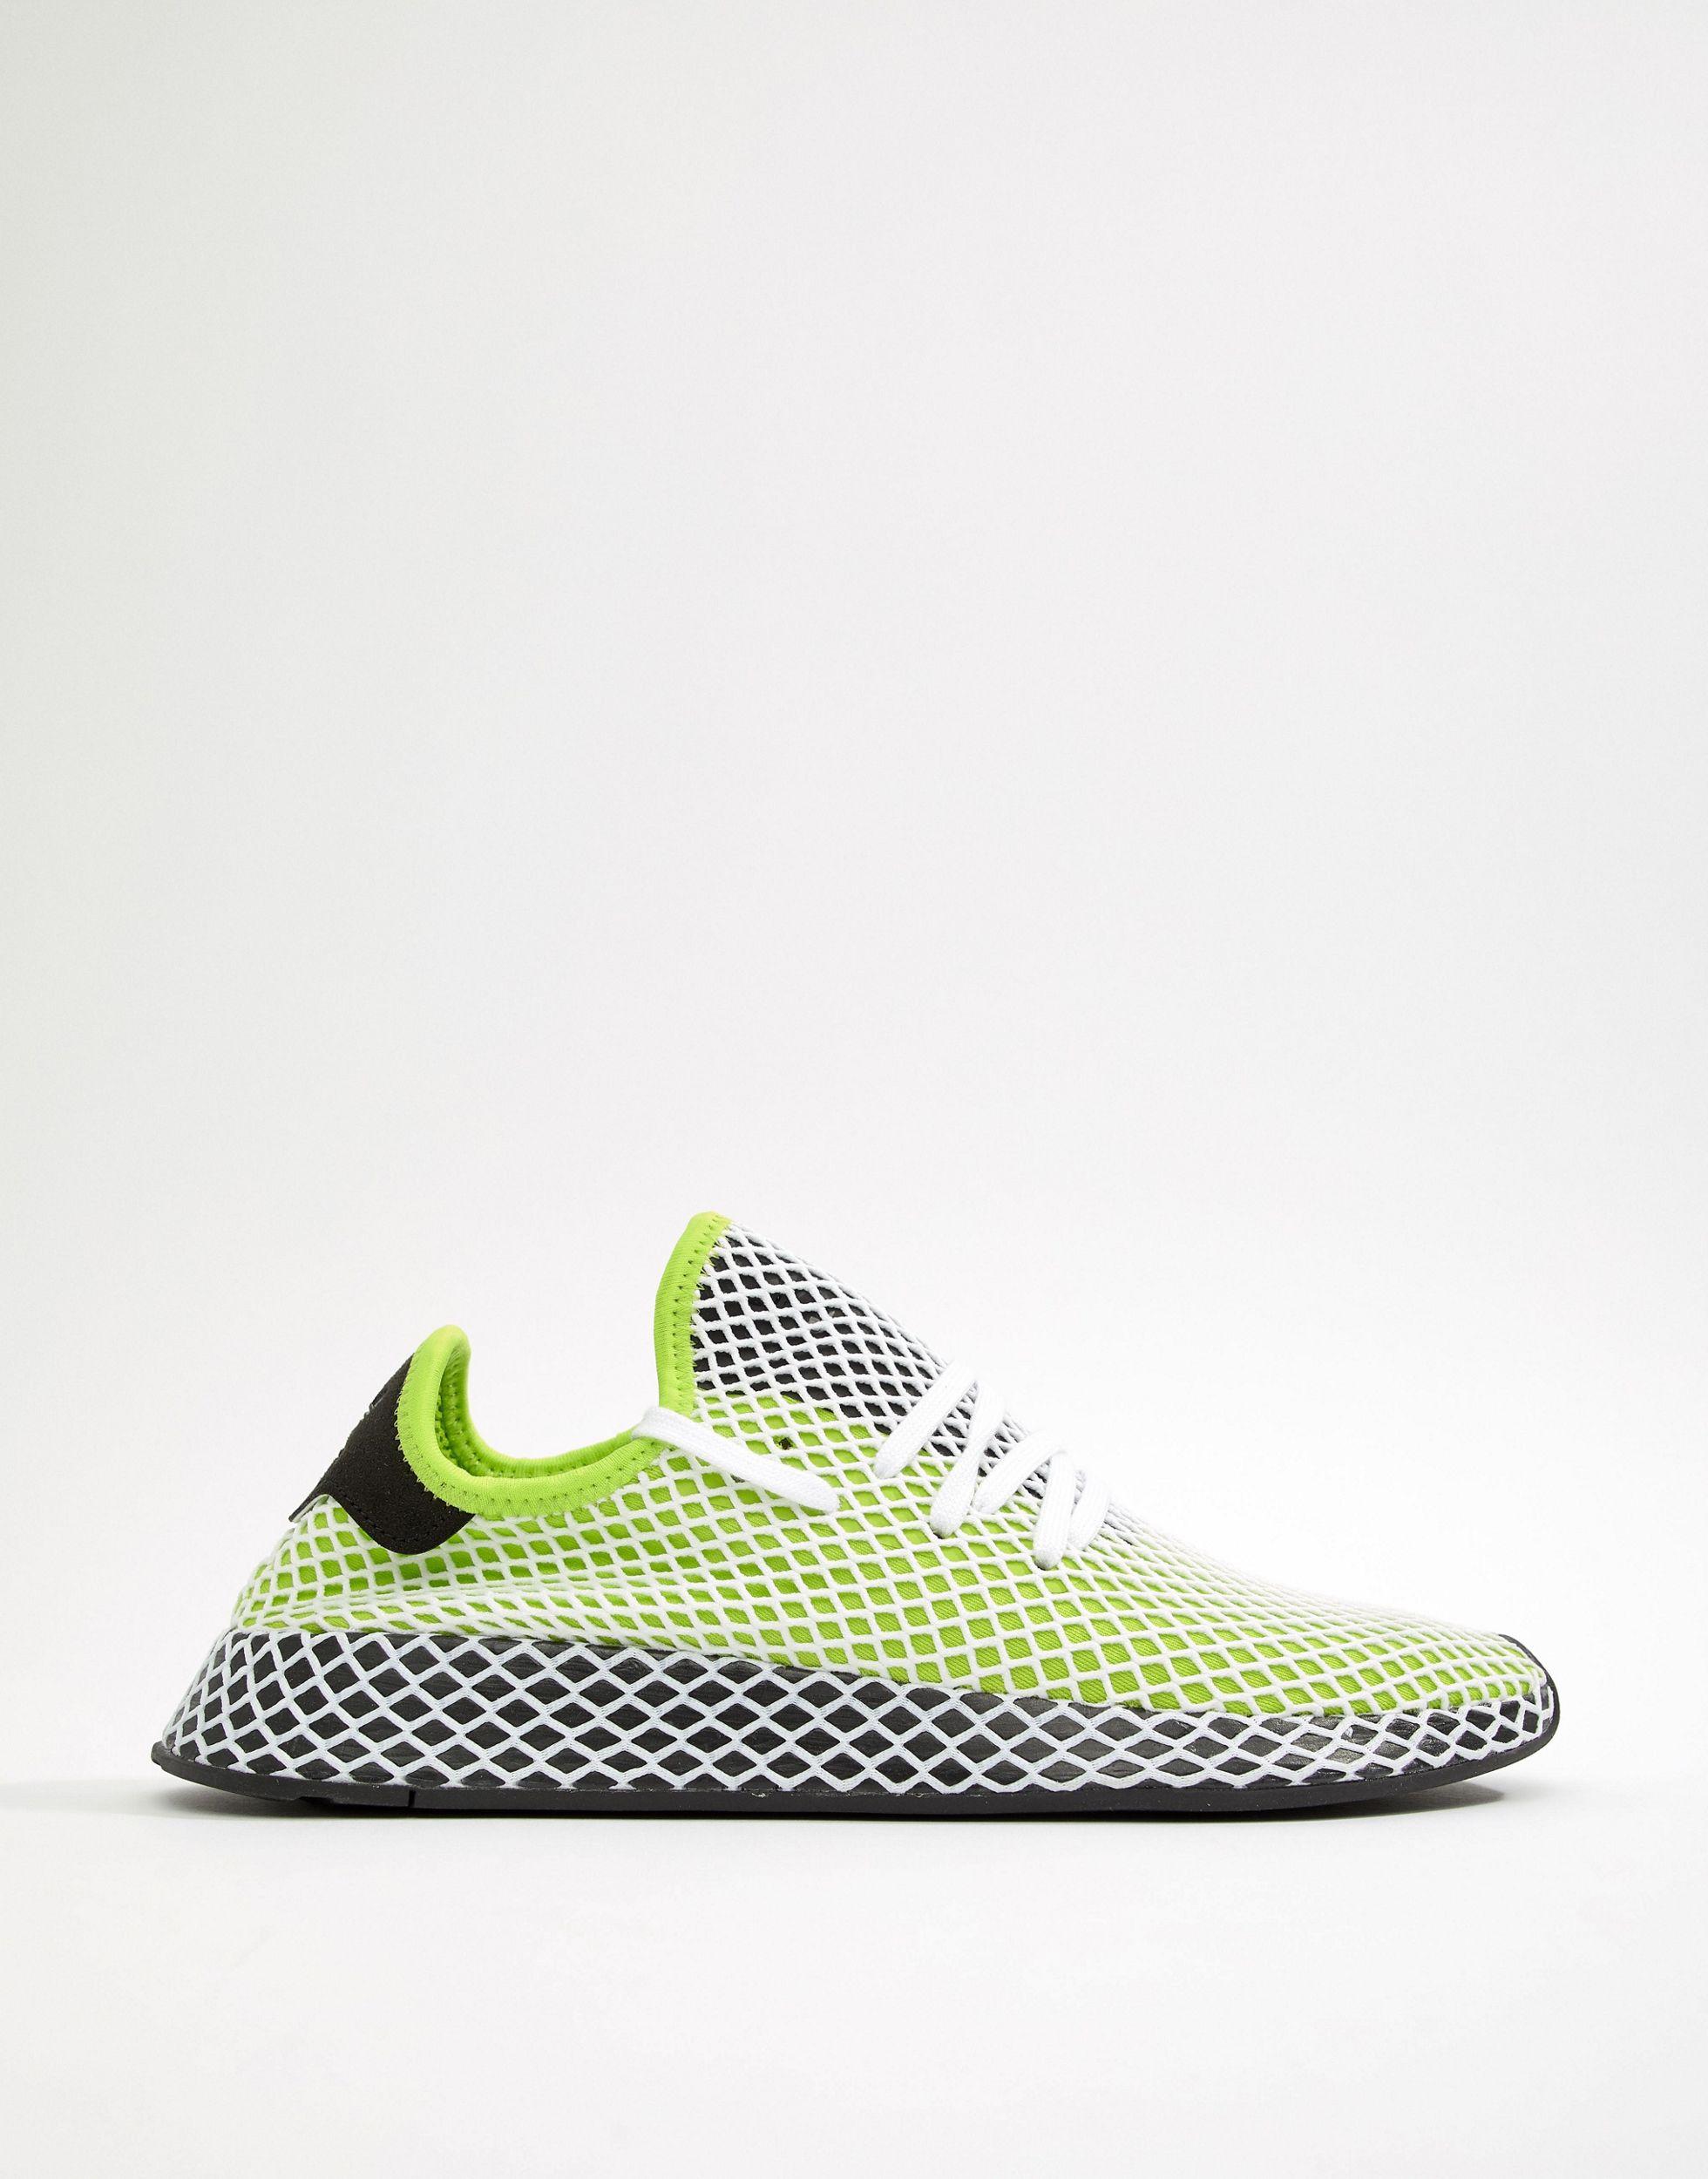 adidas Originals Deerupt Runner Trainers In Green B27779 for Men - Save 19%  | Lyst